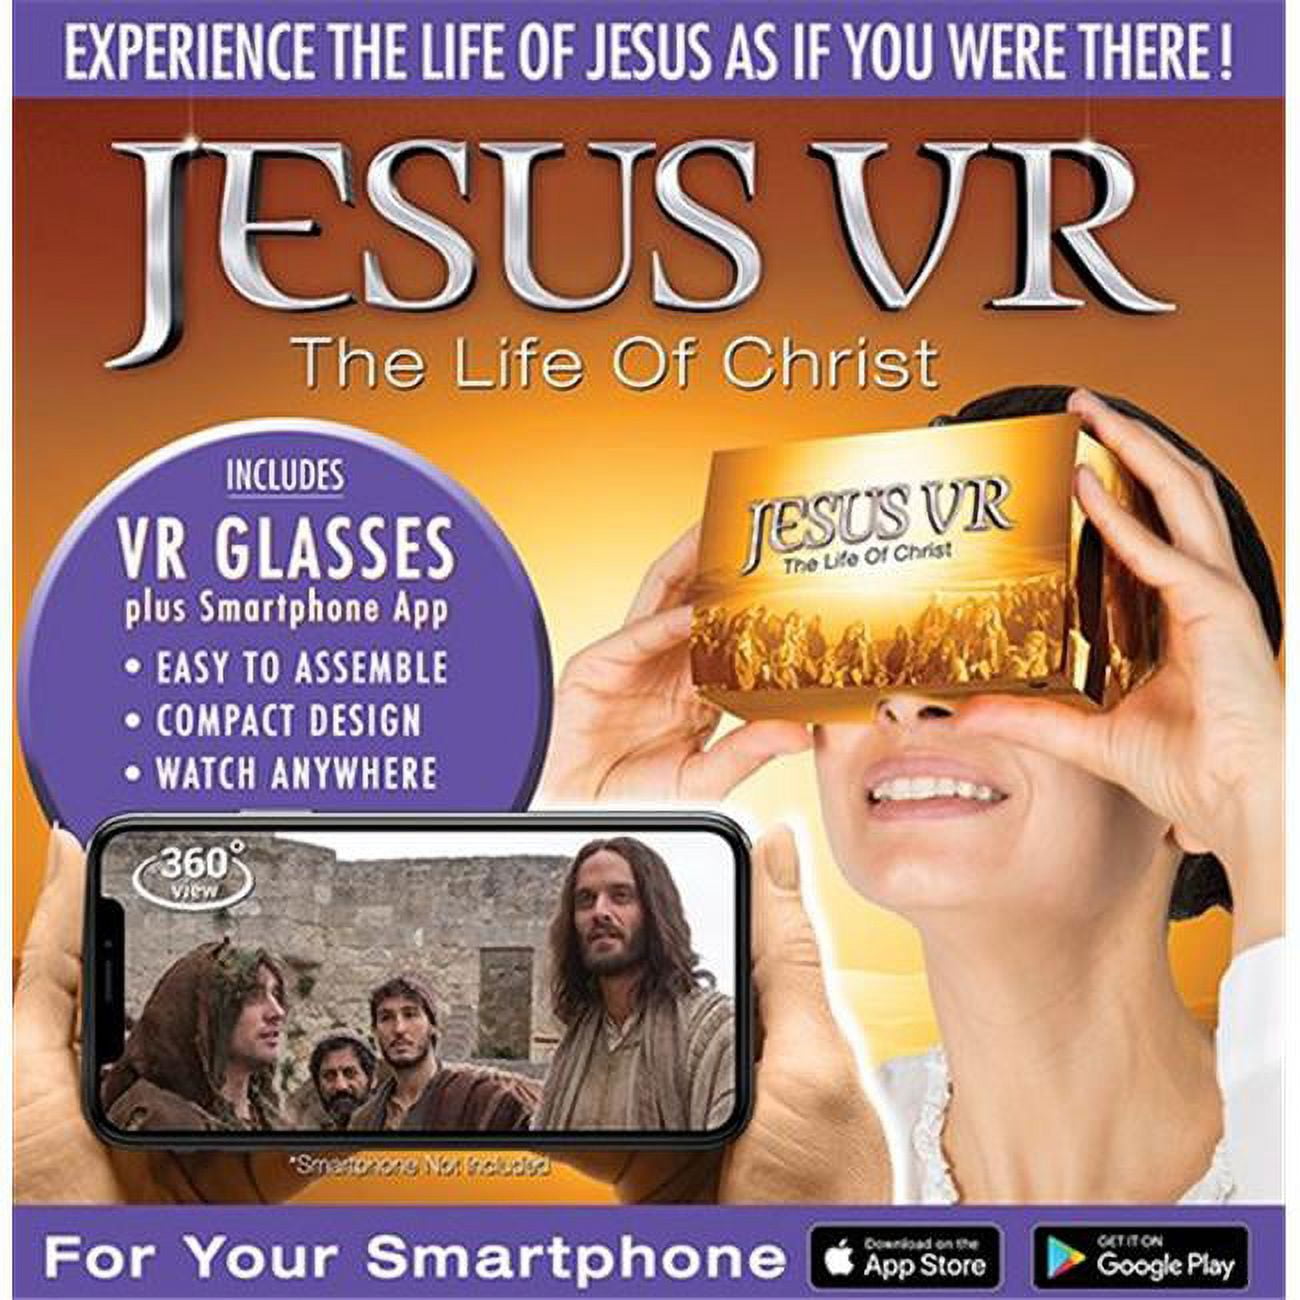 159130 Jesus Vr The Life Of Christ Dvd - Virtual Reality